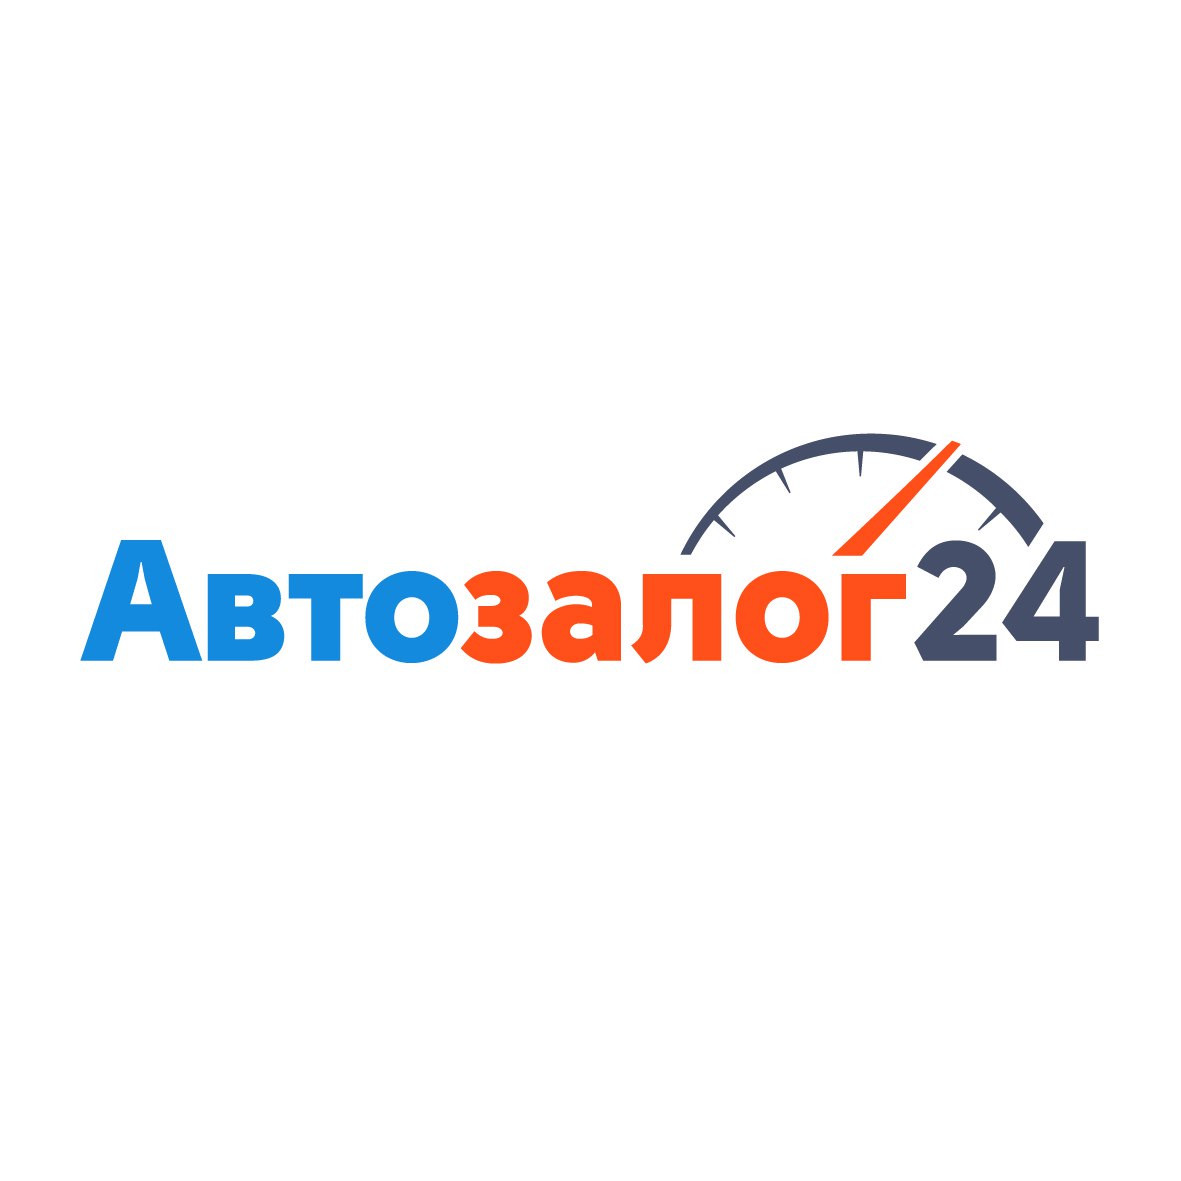 Автоломбард Автозалог-24